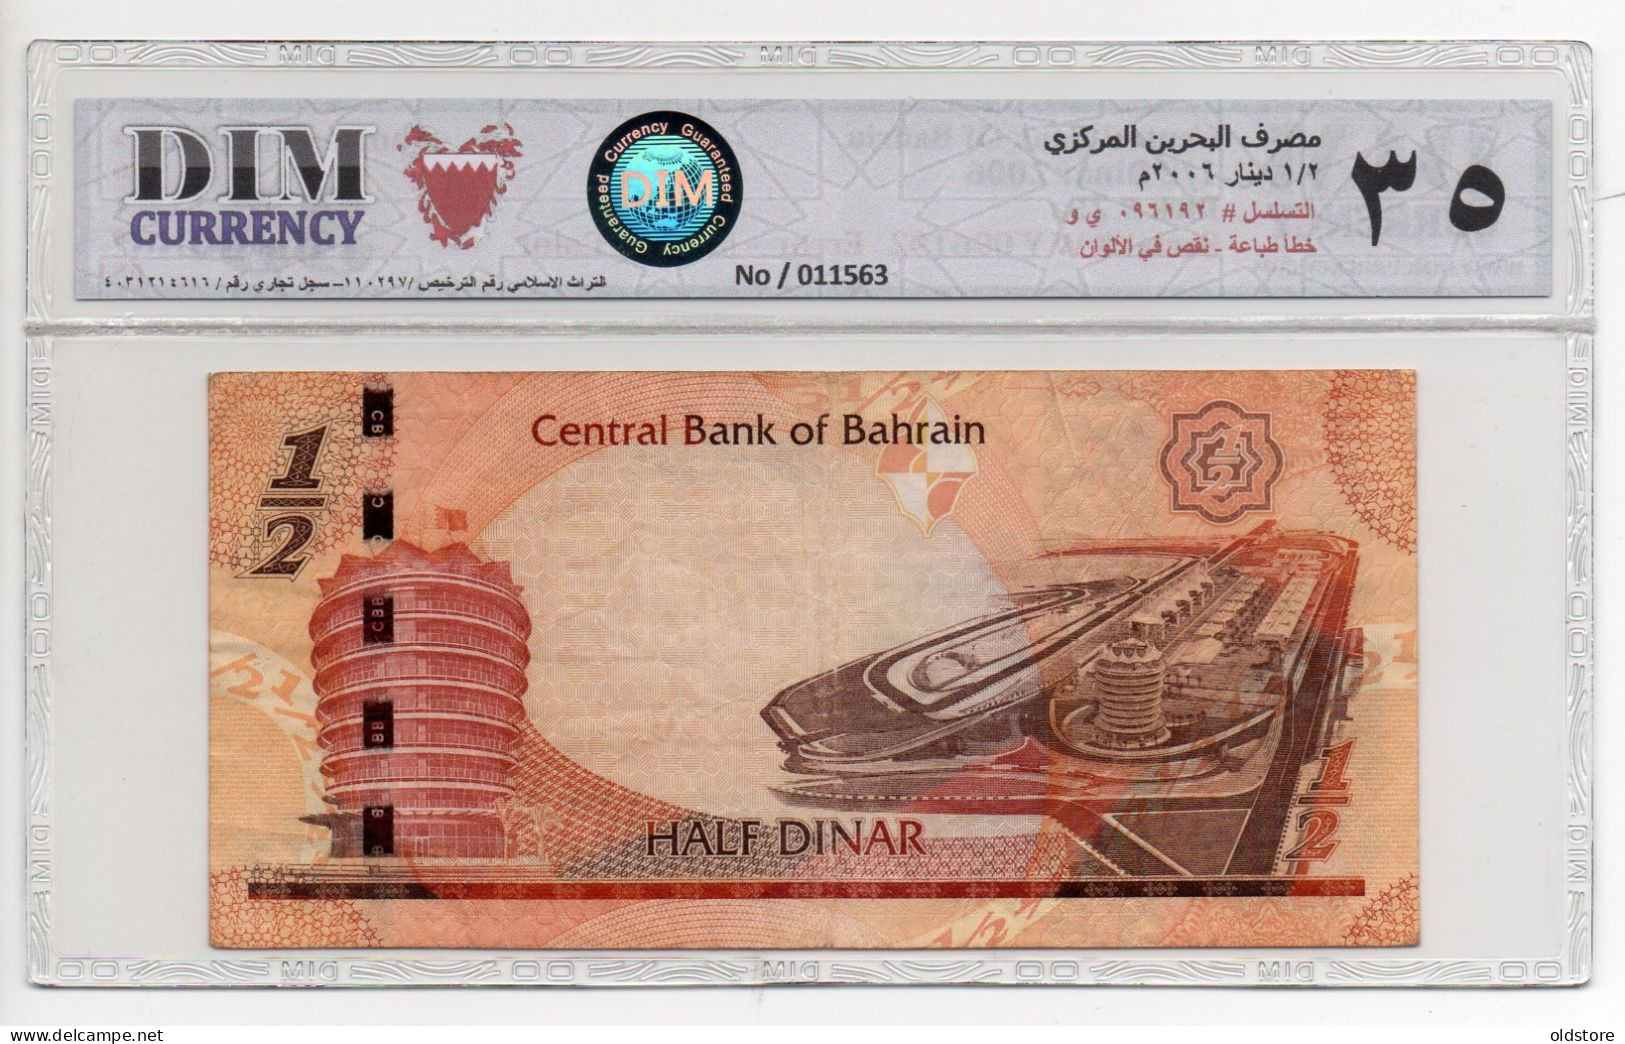 Bahrain Banknotes 1/2 Dinar - ERROR - ND 2006 - Grade By DIM 35 VF - Used Condition - Bahrein